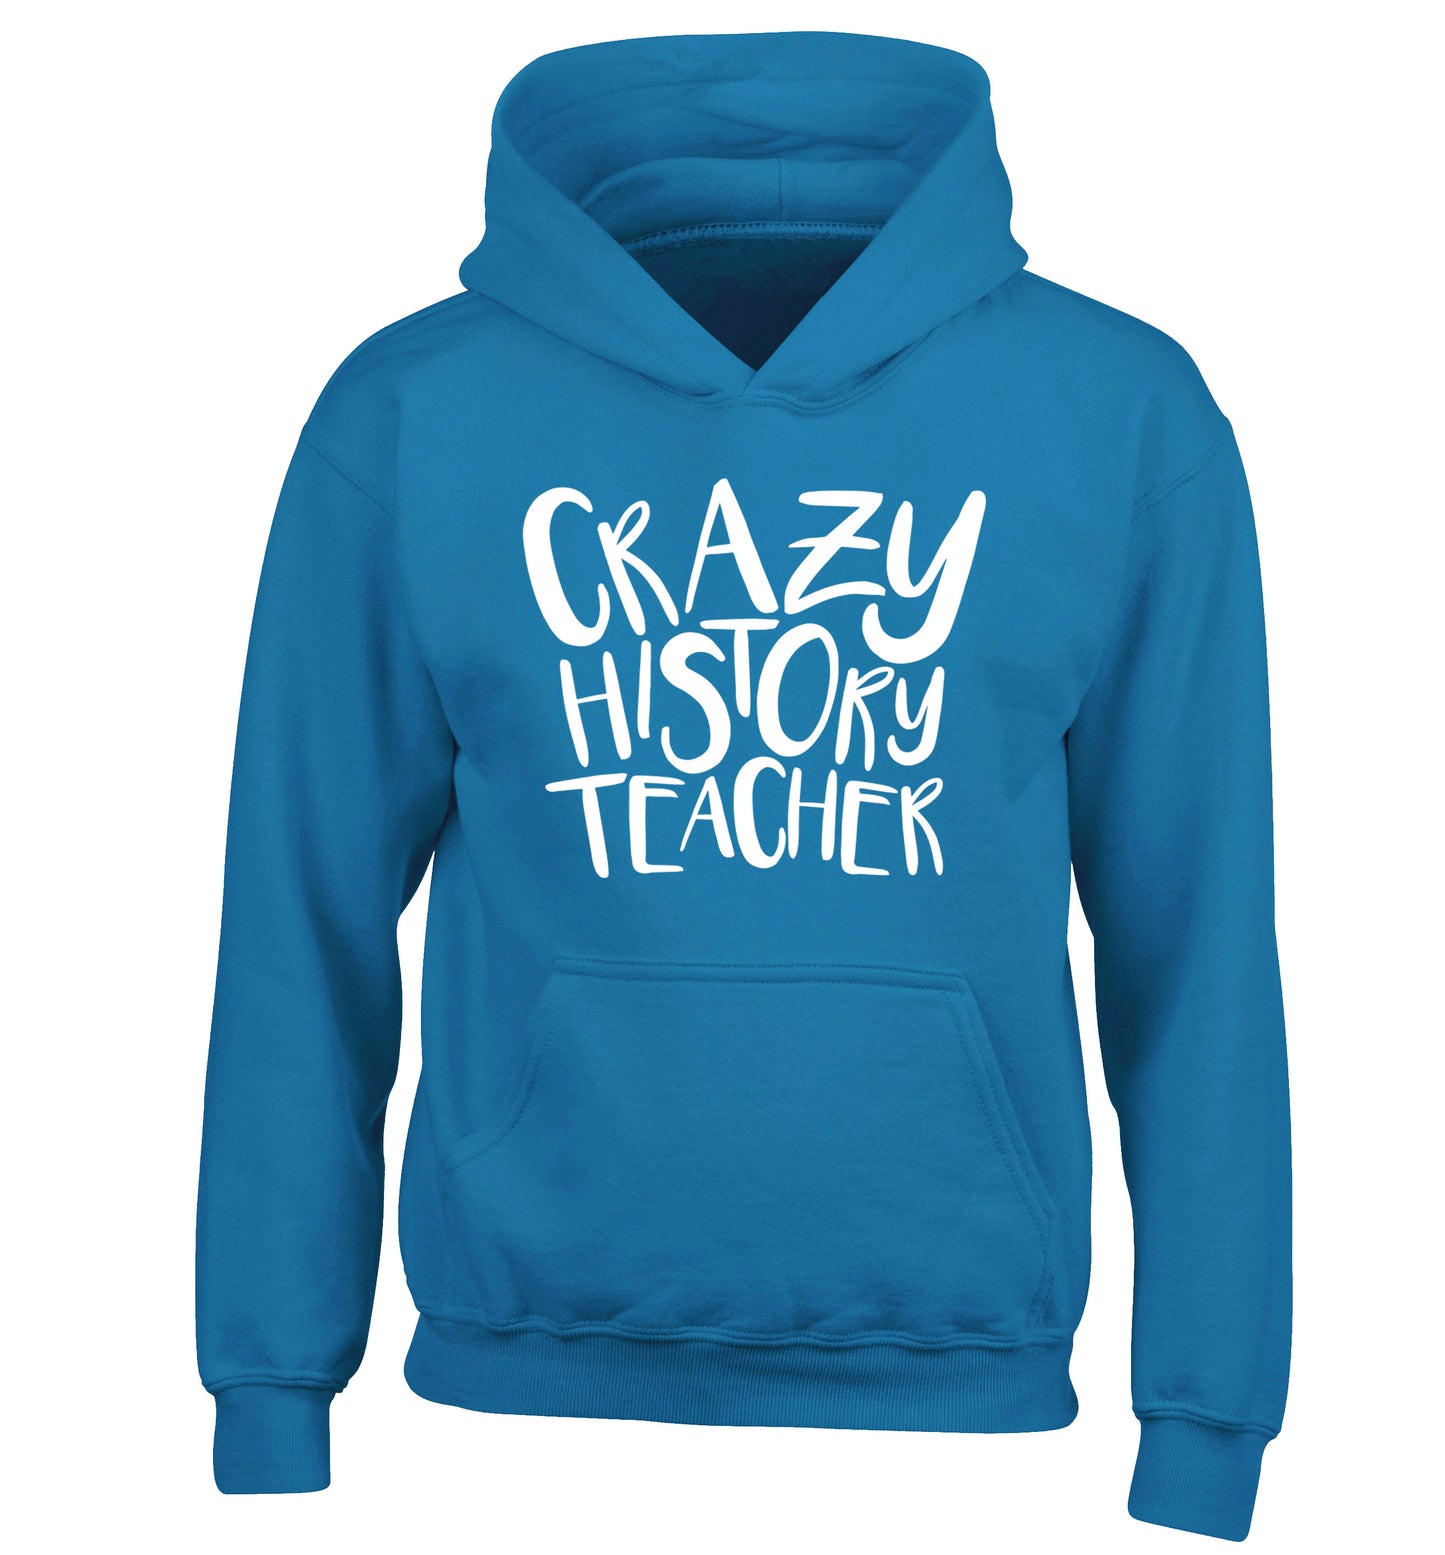 Crazy history teacher children's blue hoodie 12-13 Years